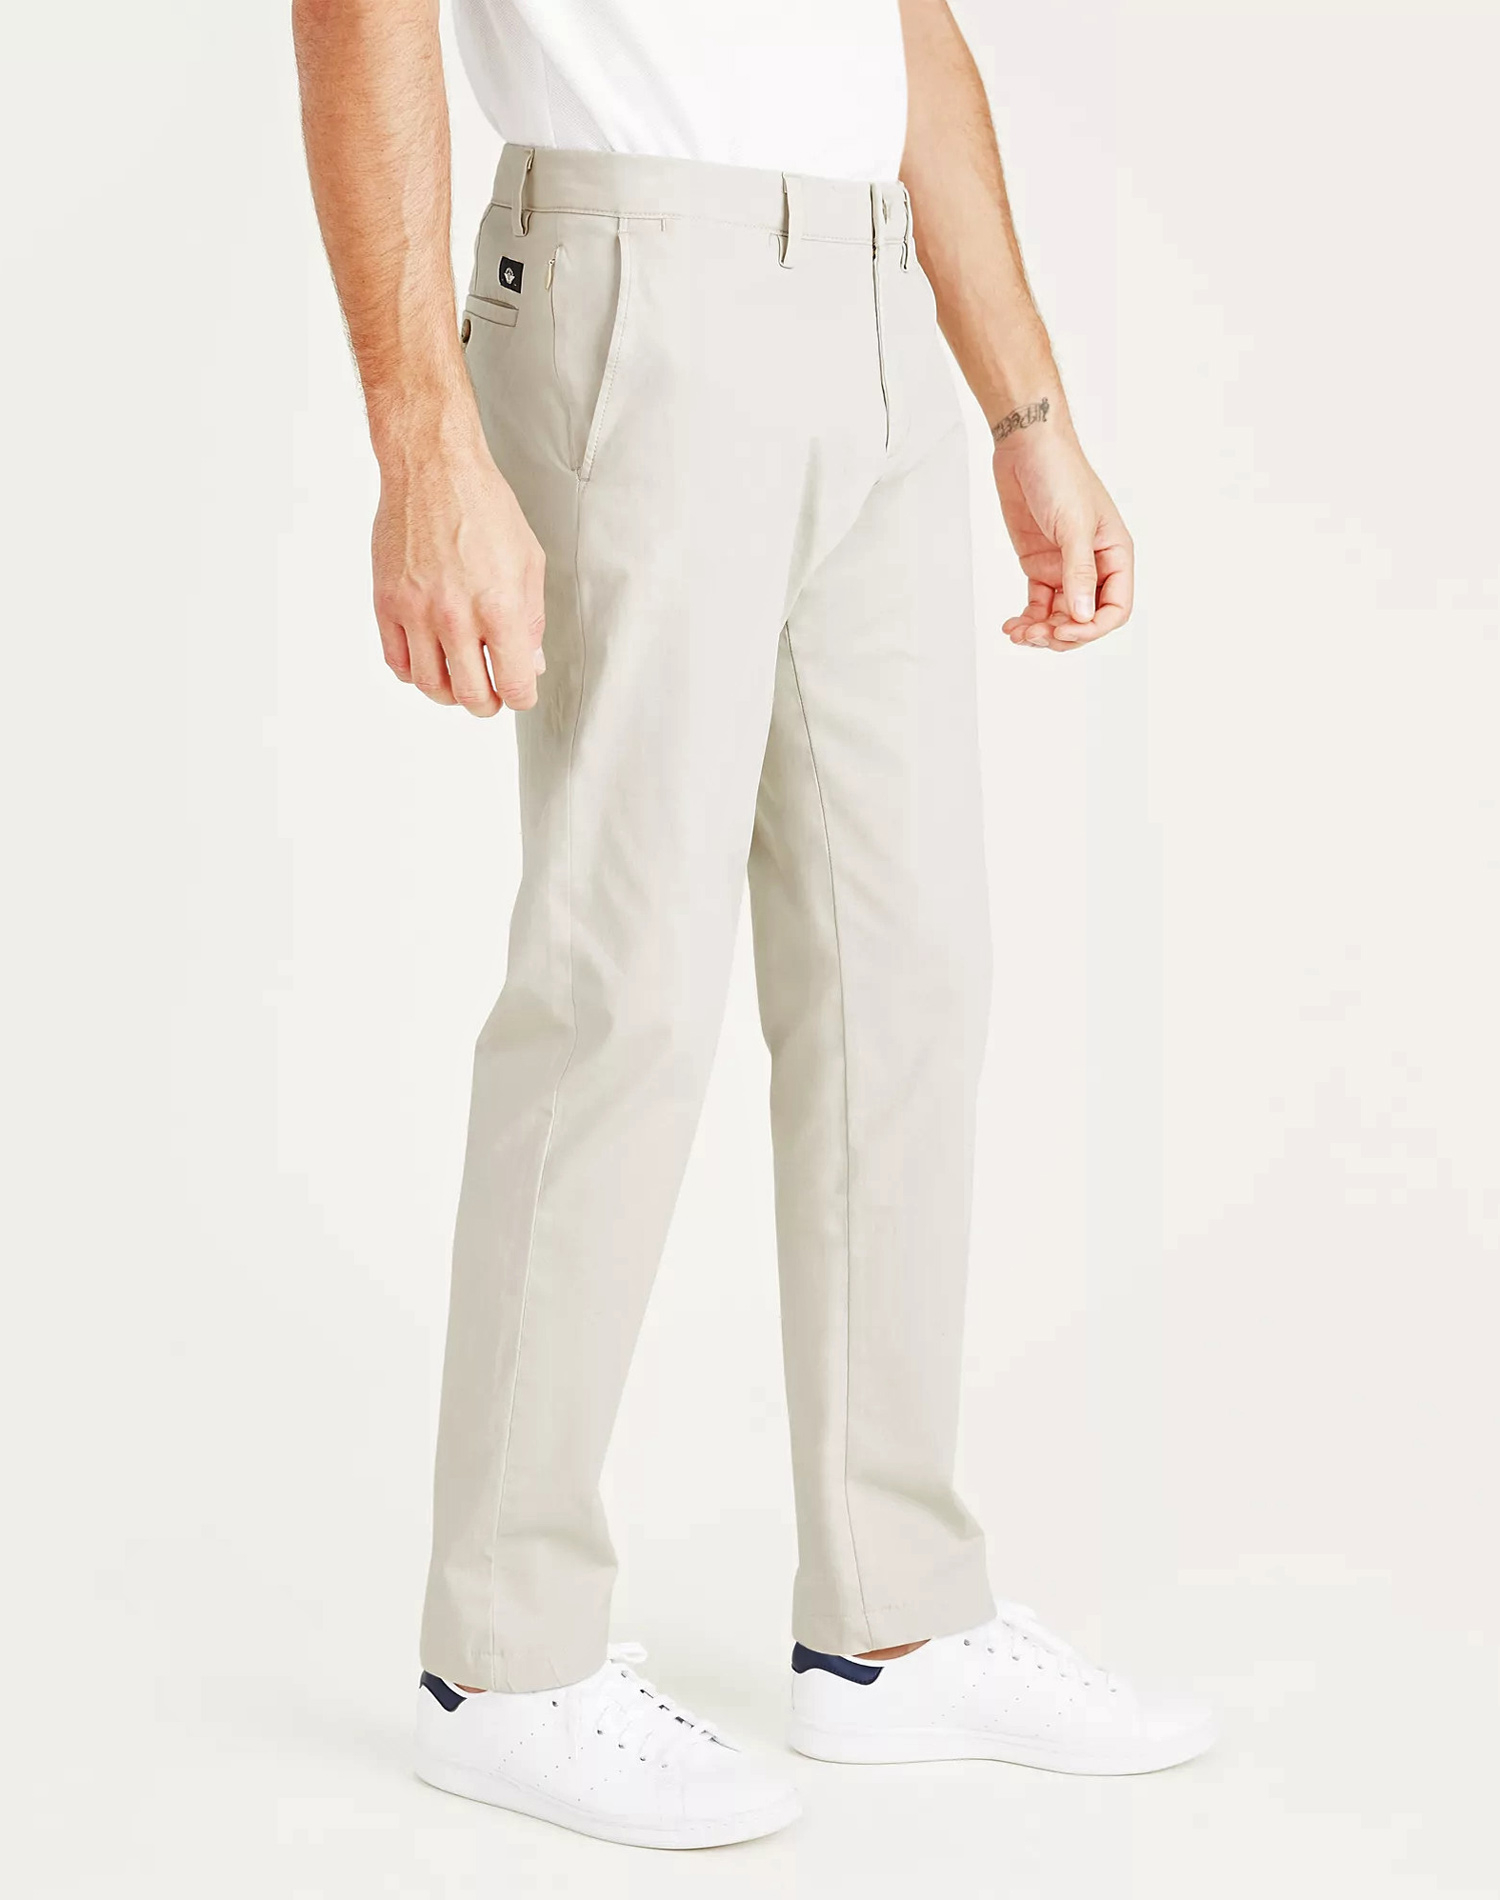 Dockers pantalons d'home smart 360 chino tapered 79645-0050 blanc trencat